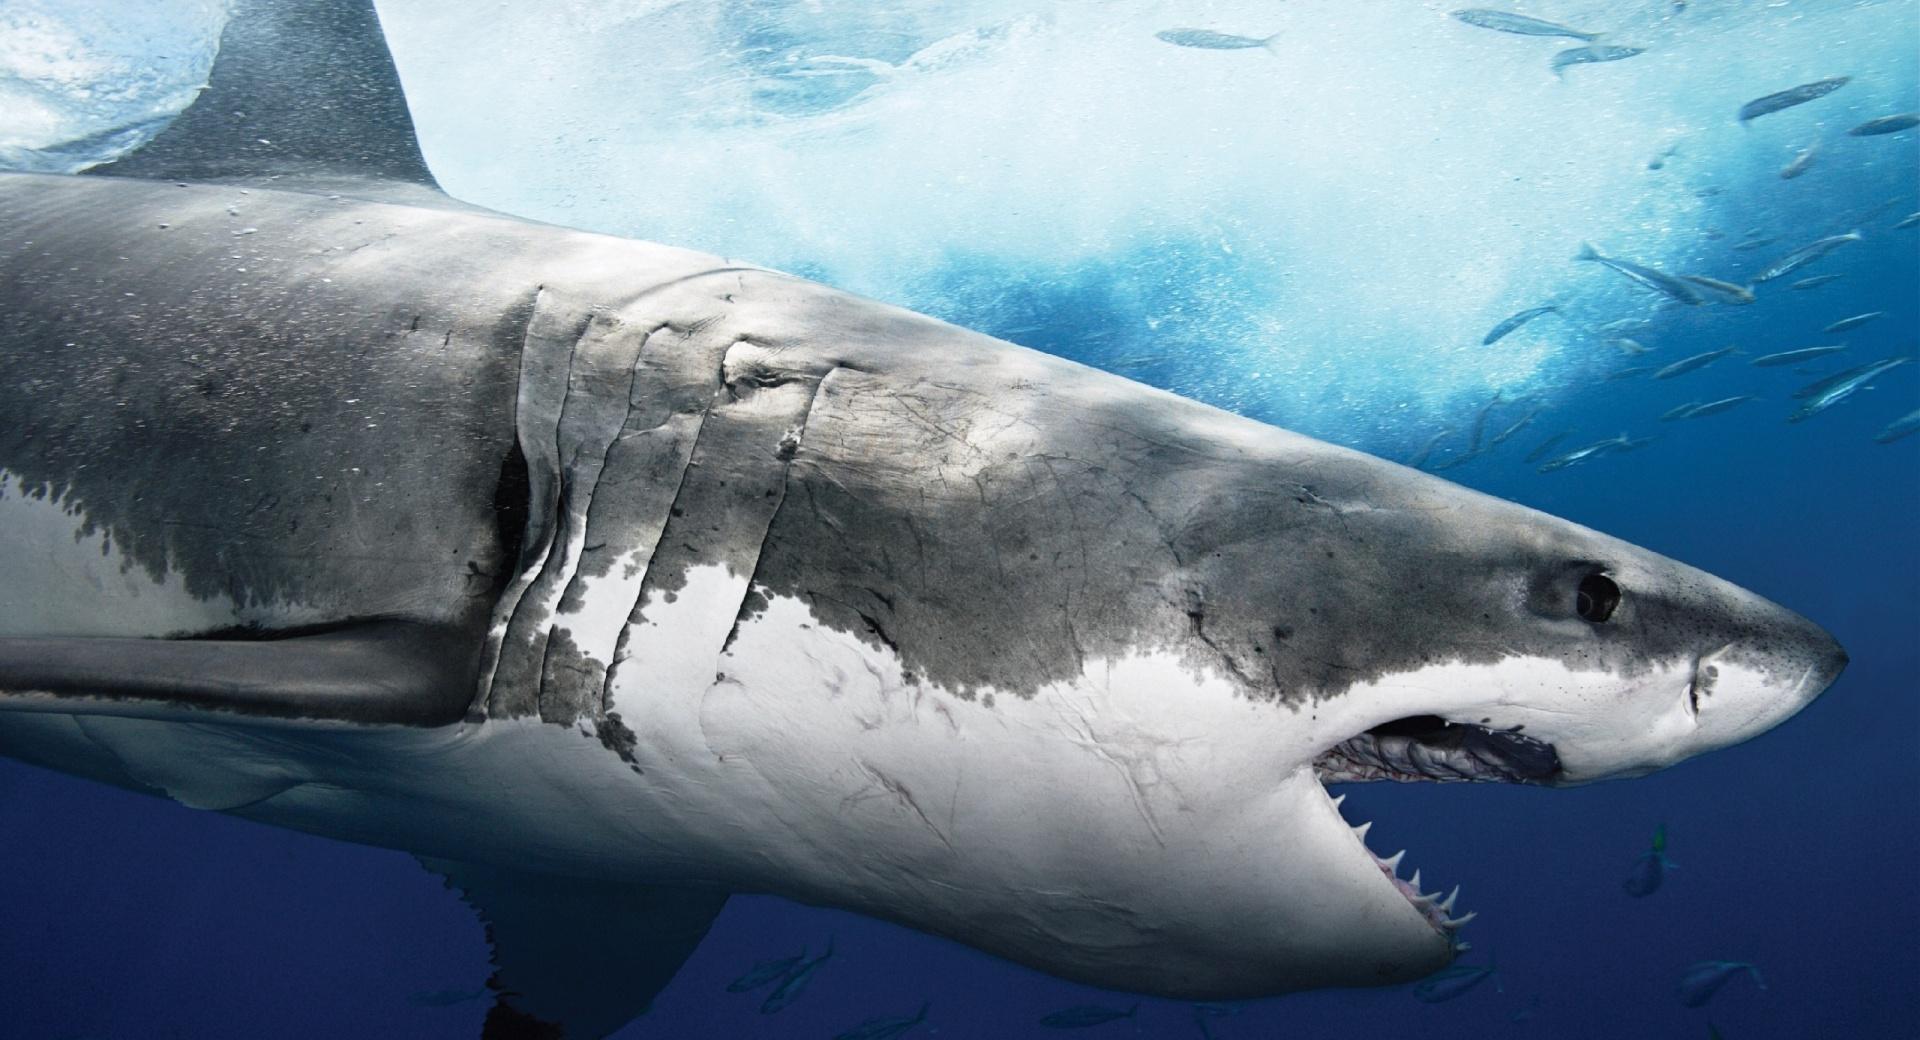 Sea Predator Shark at 1280 x 960 size wallpapers HD quality